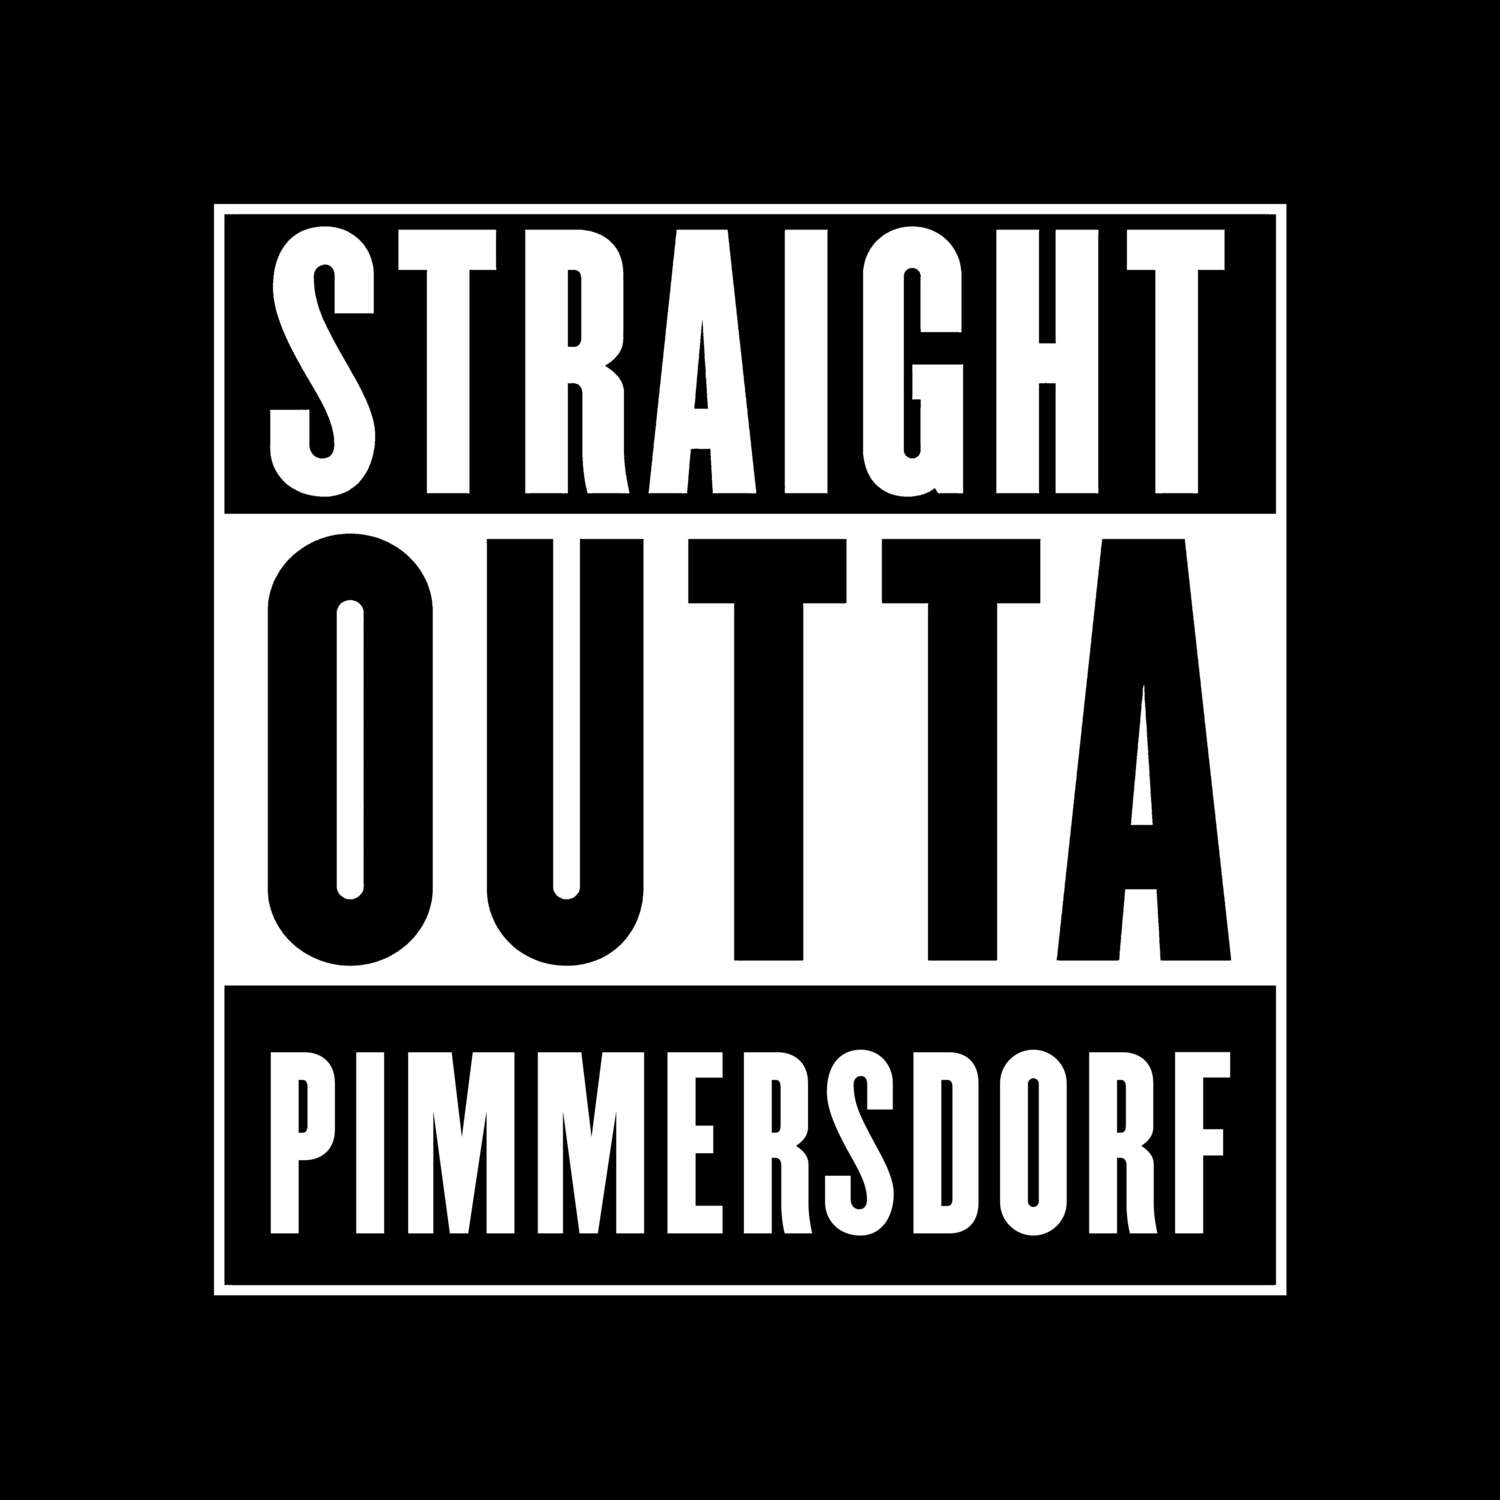 Pimmersdorf T-Shirt »Straight Outta«